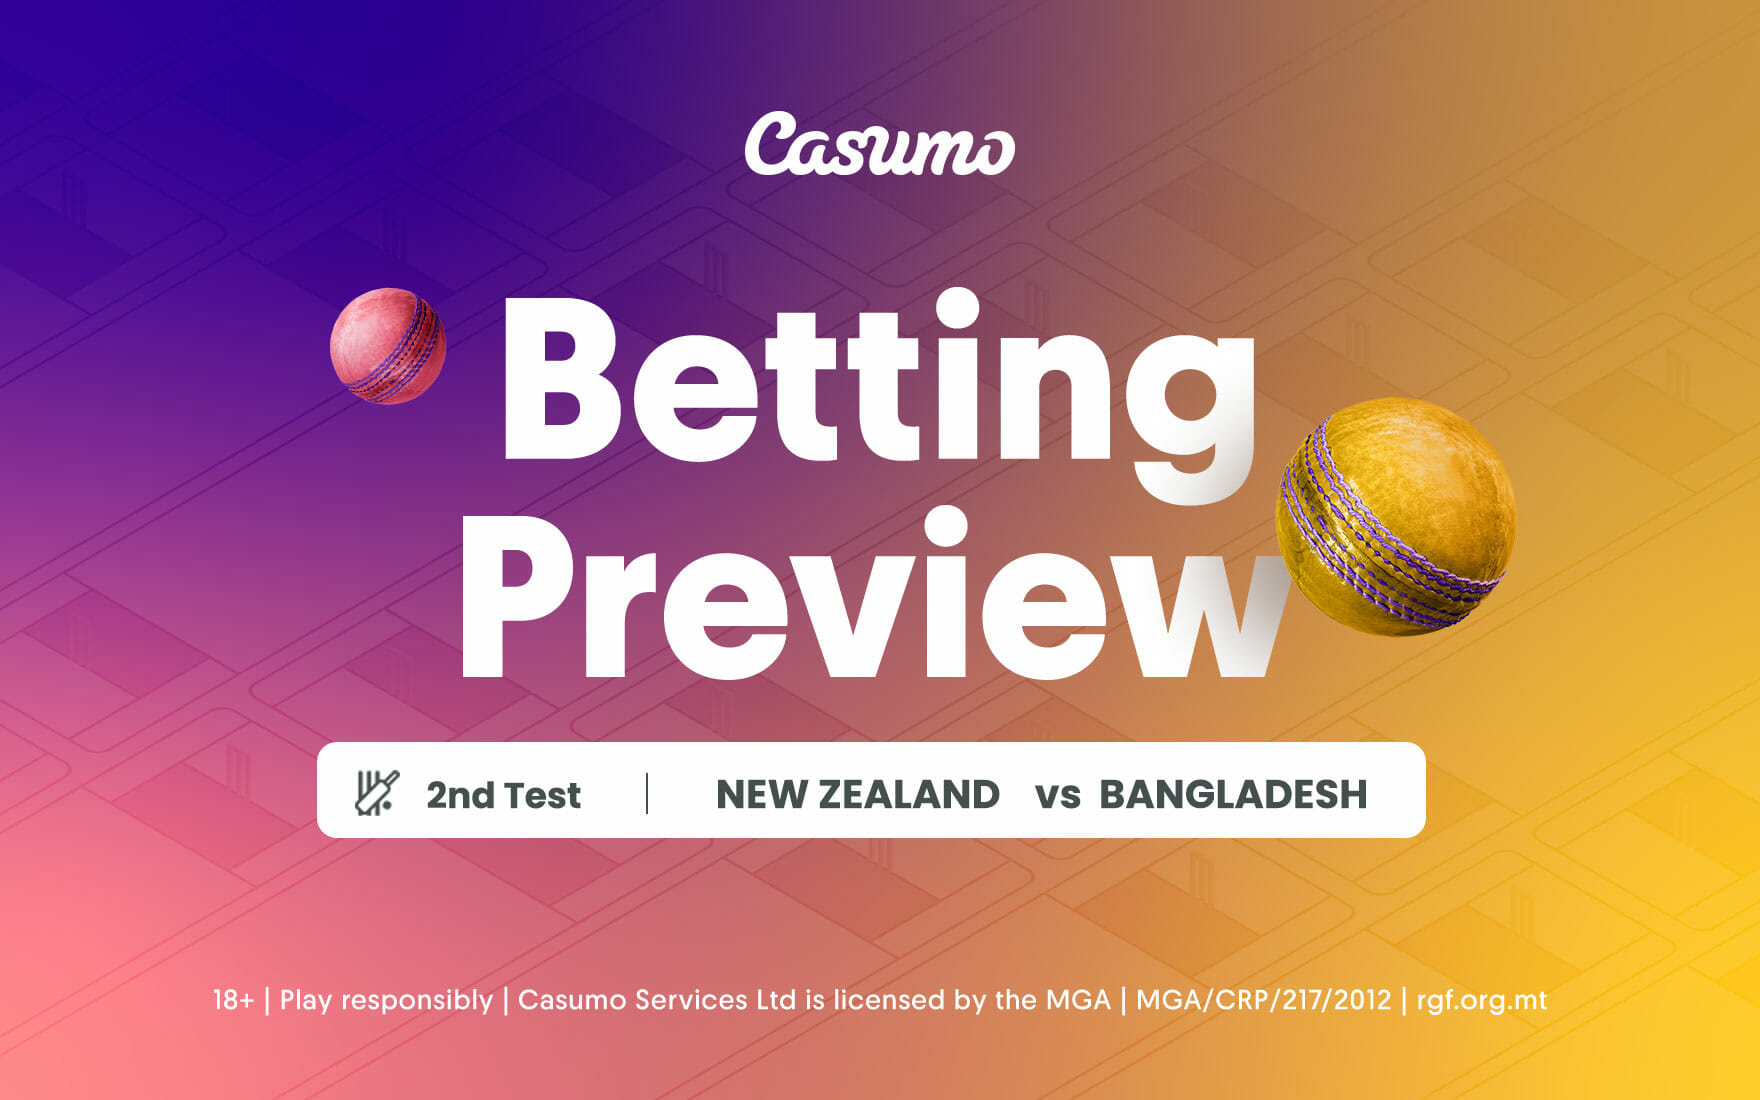 New Zealand vs Bangladesh betting tips